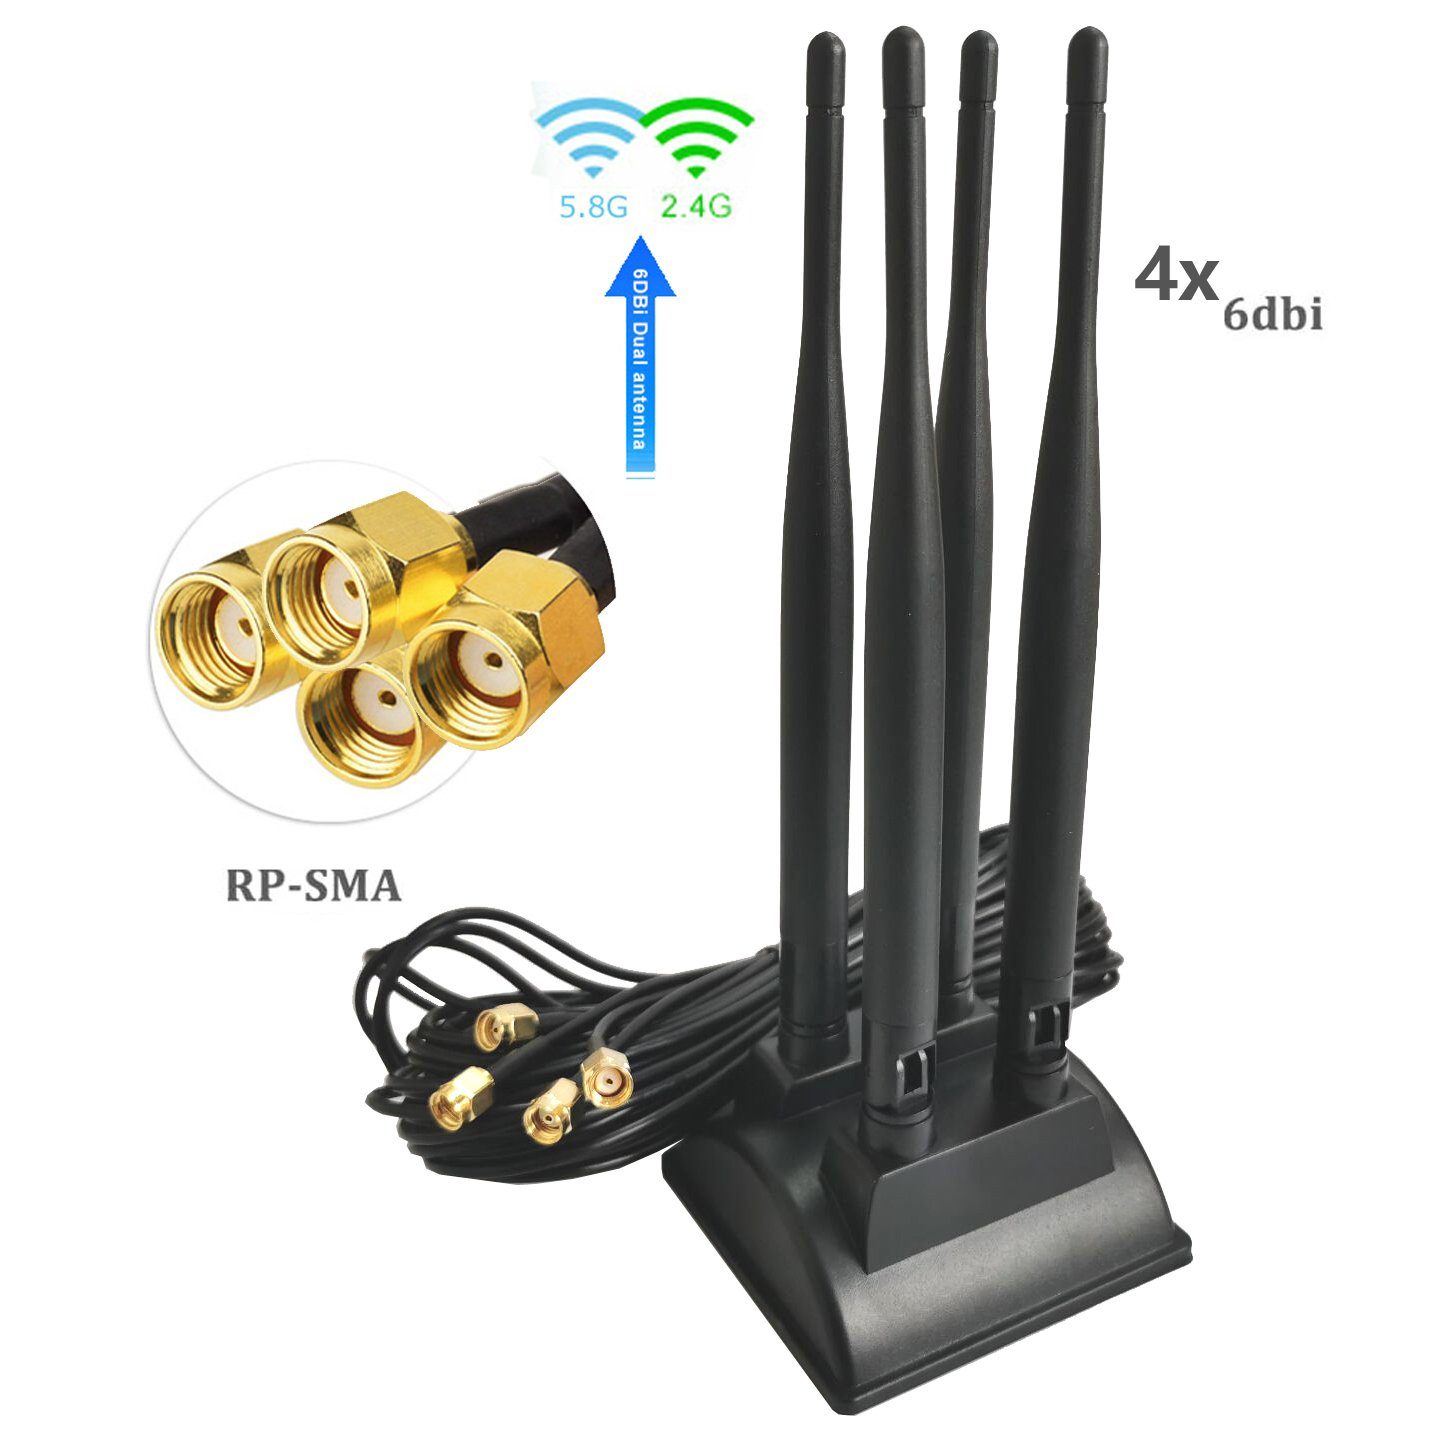 RP-SMA 2.4G Antenne Bolwins 3m 5.8G 6dBi I03D Kabel Adapter 4x WiFi Standfuss WLAN-Antenne